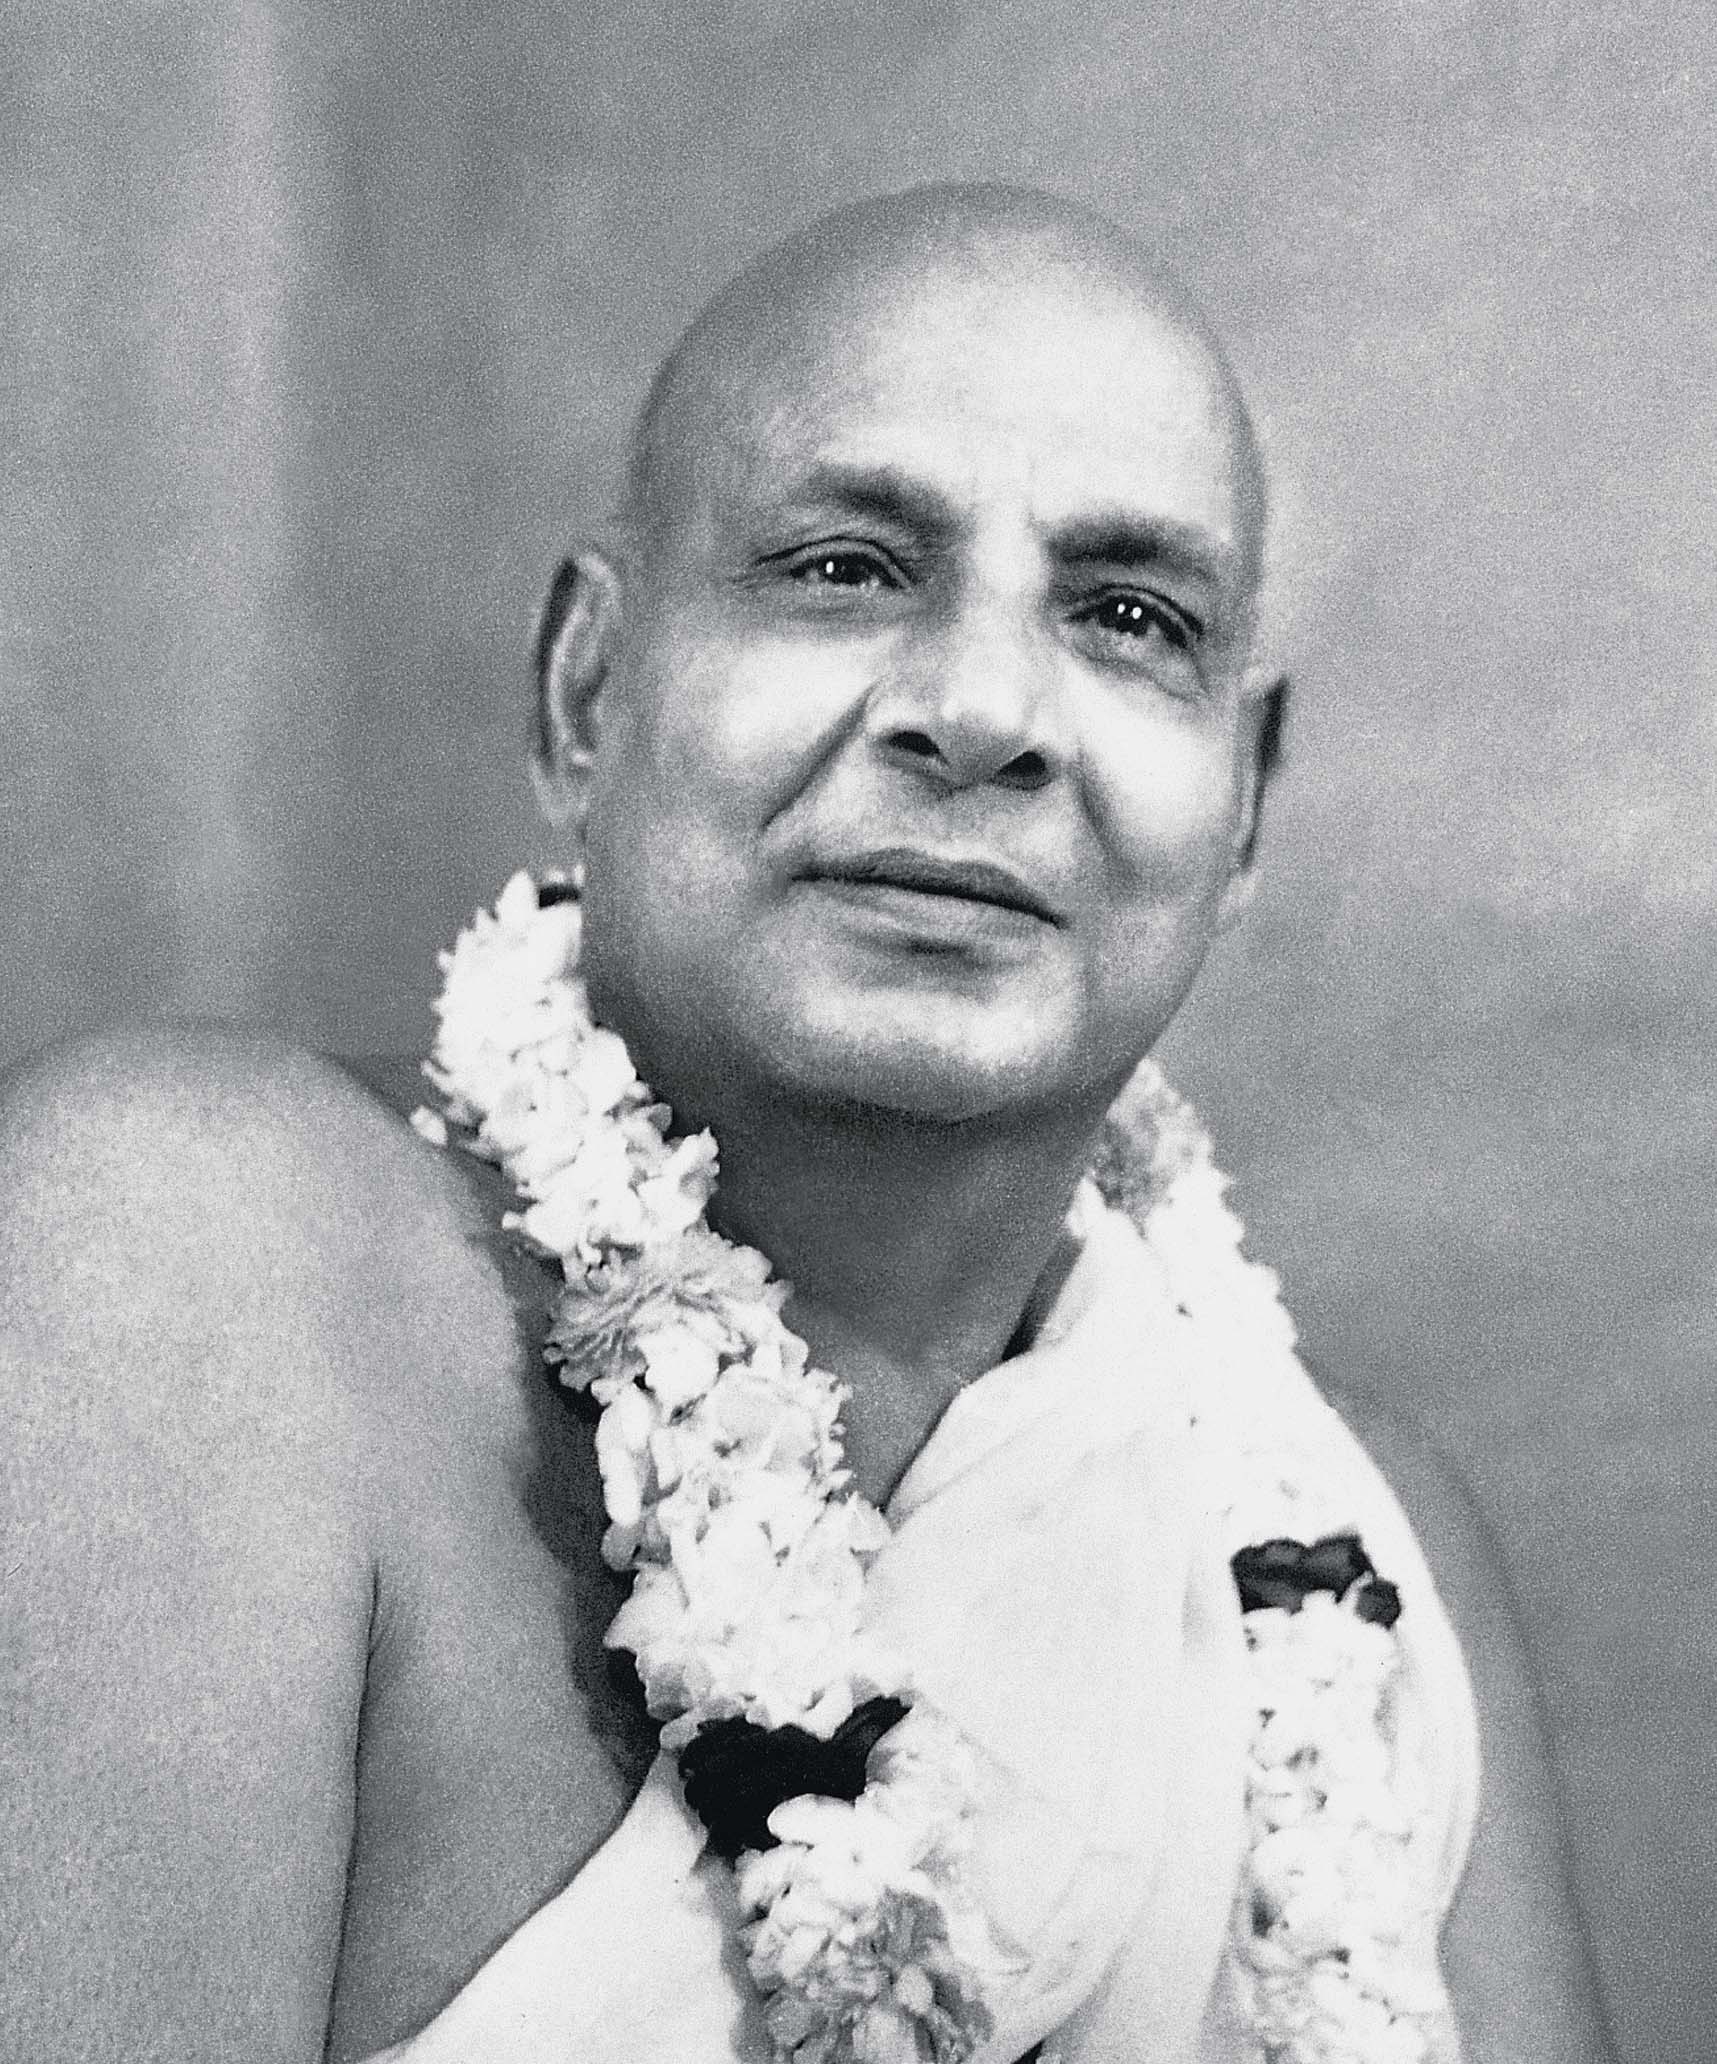 Swami Sivananda - Image Gallery | The Divine Life Society